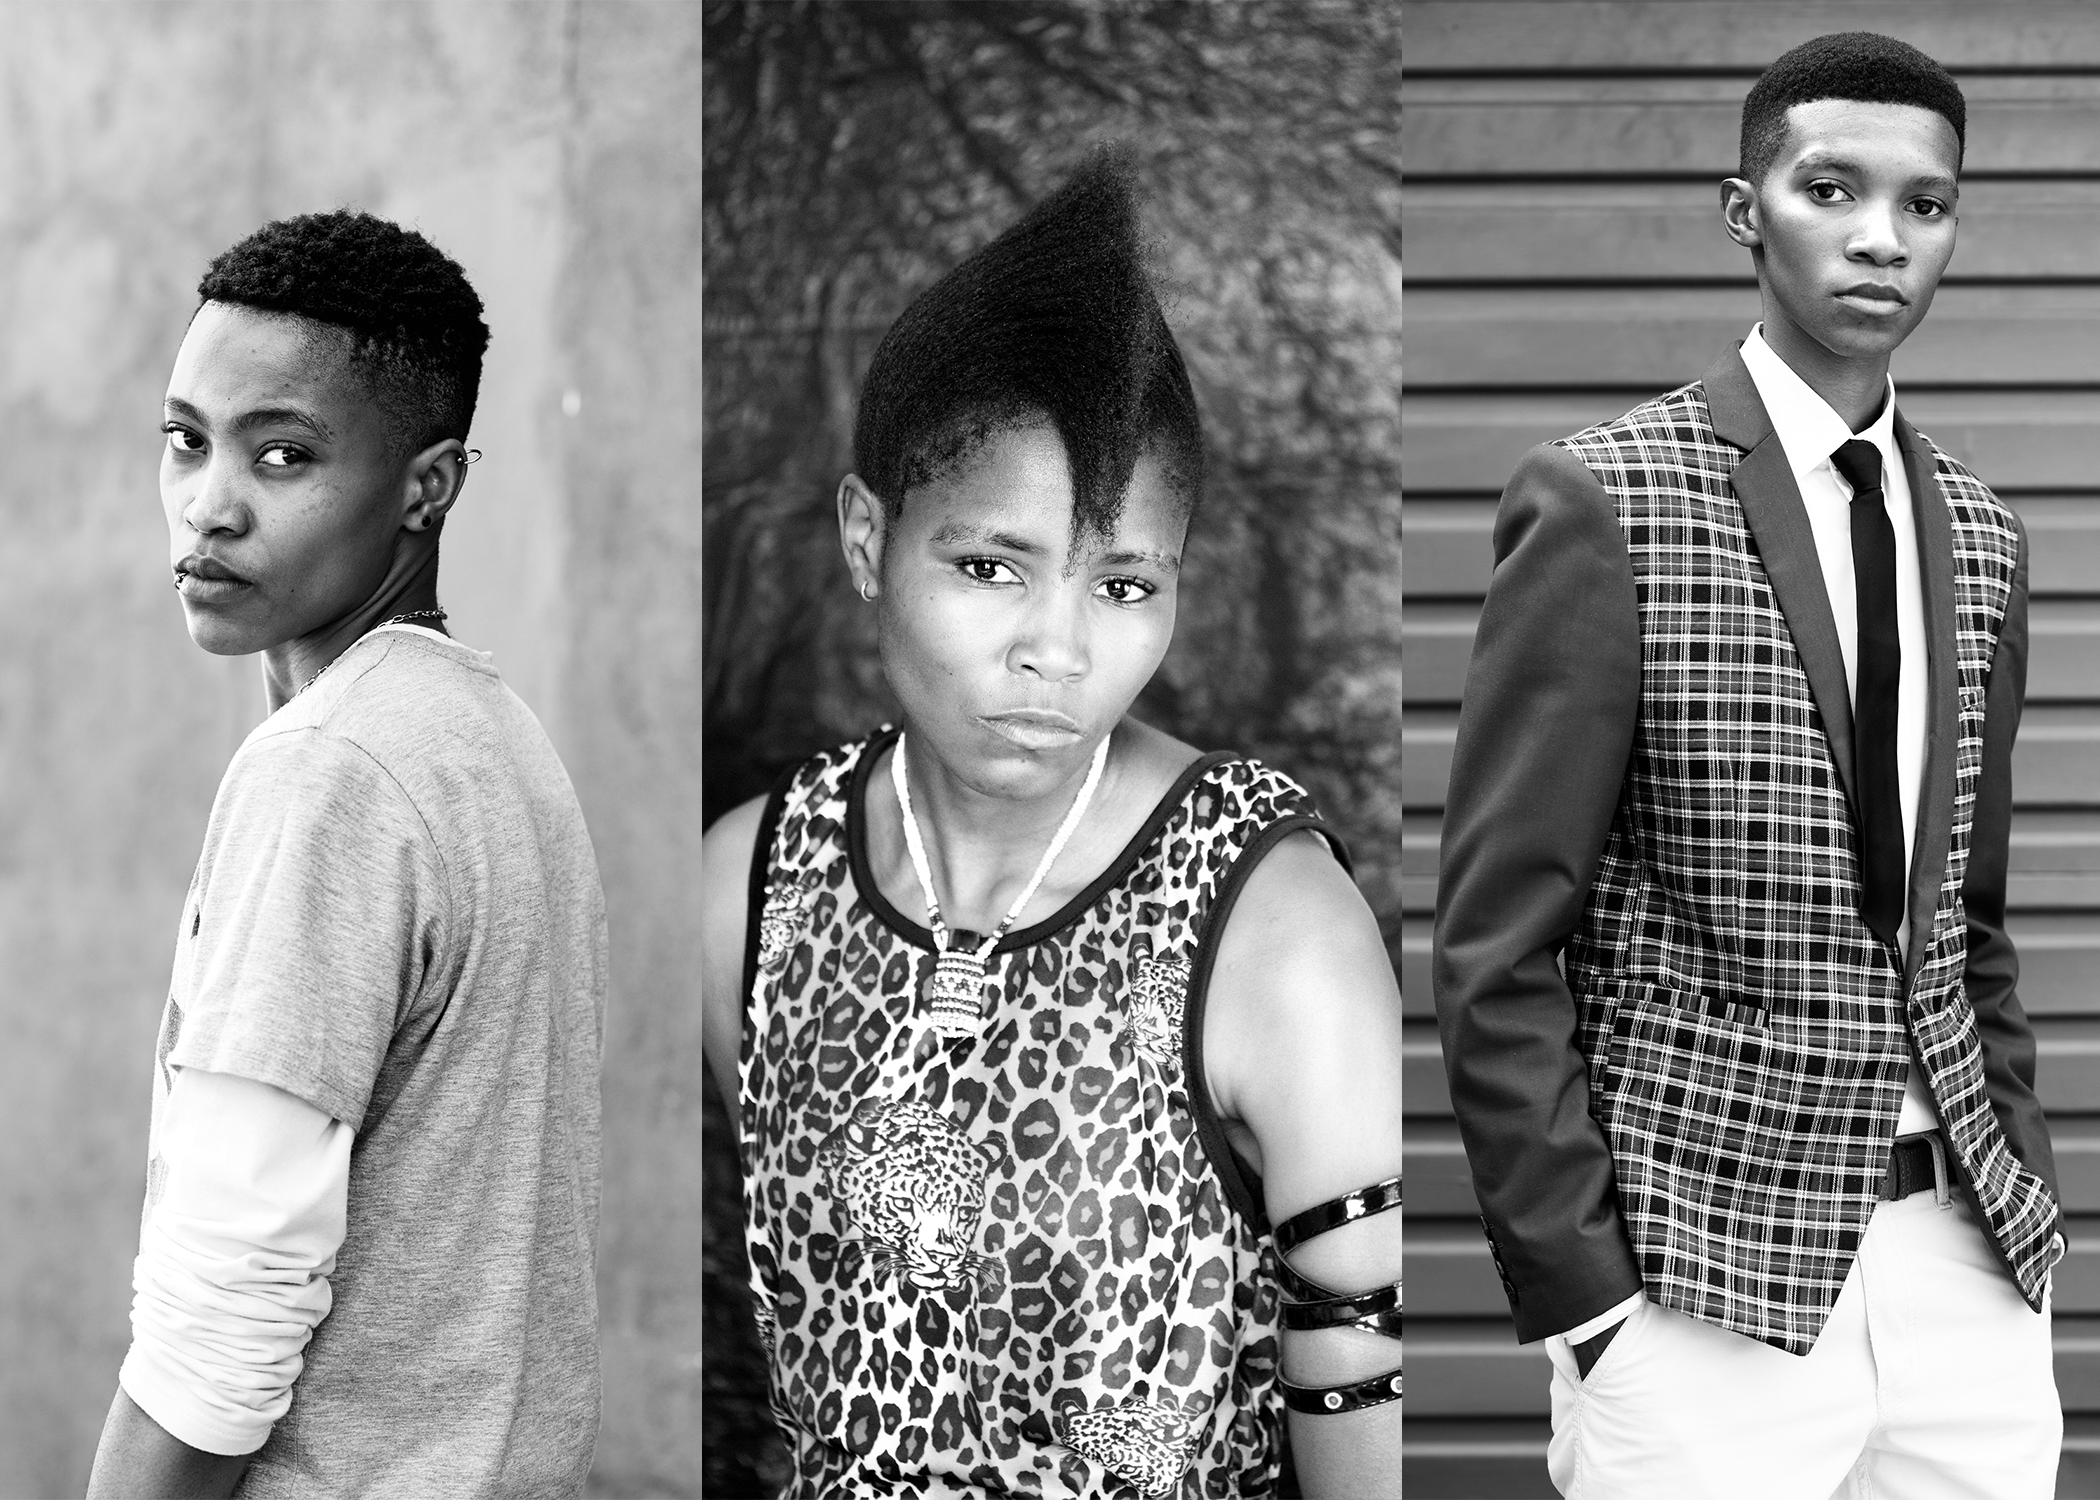 Three black and white portraits of people by artist Zanele Muholi.